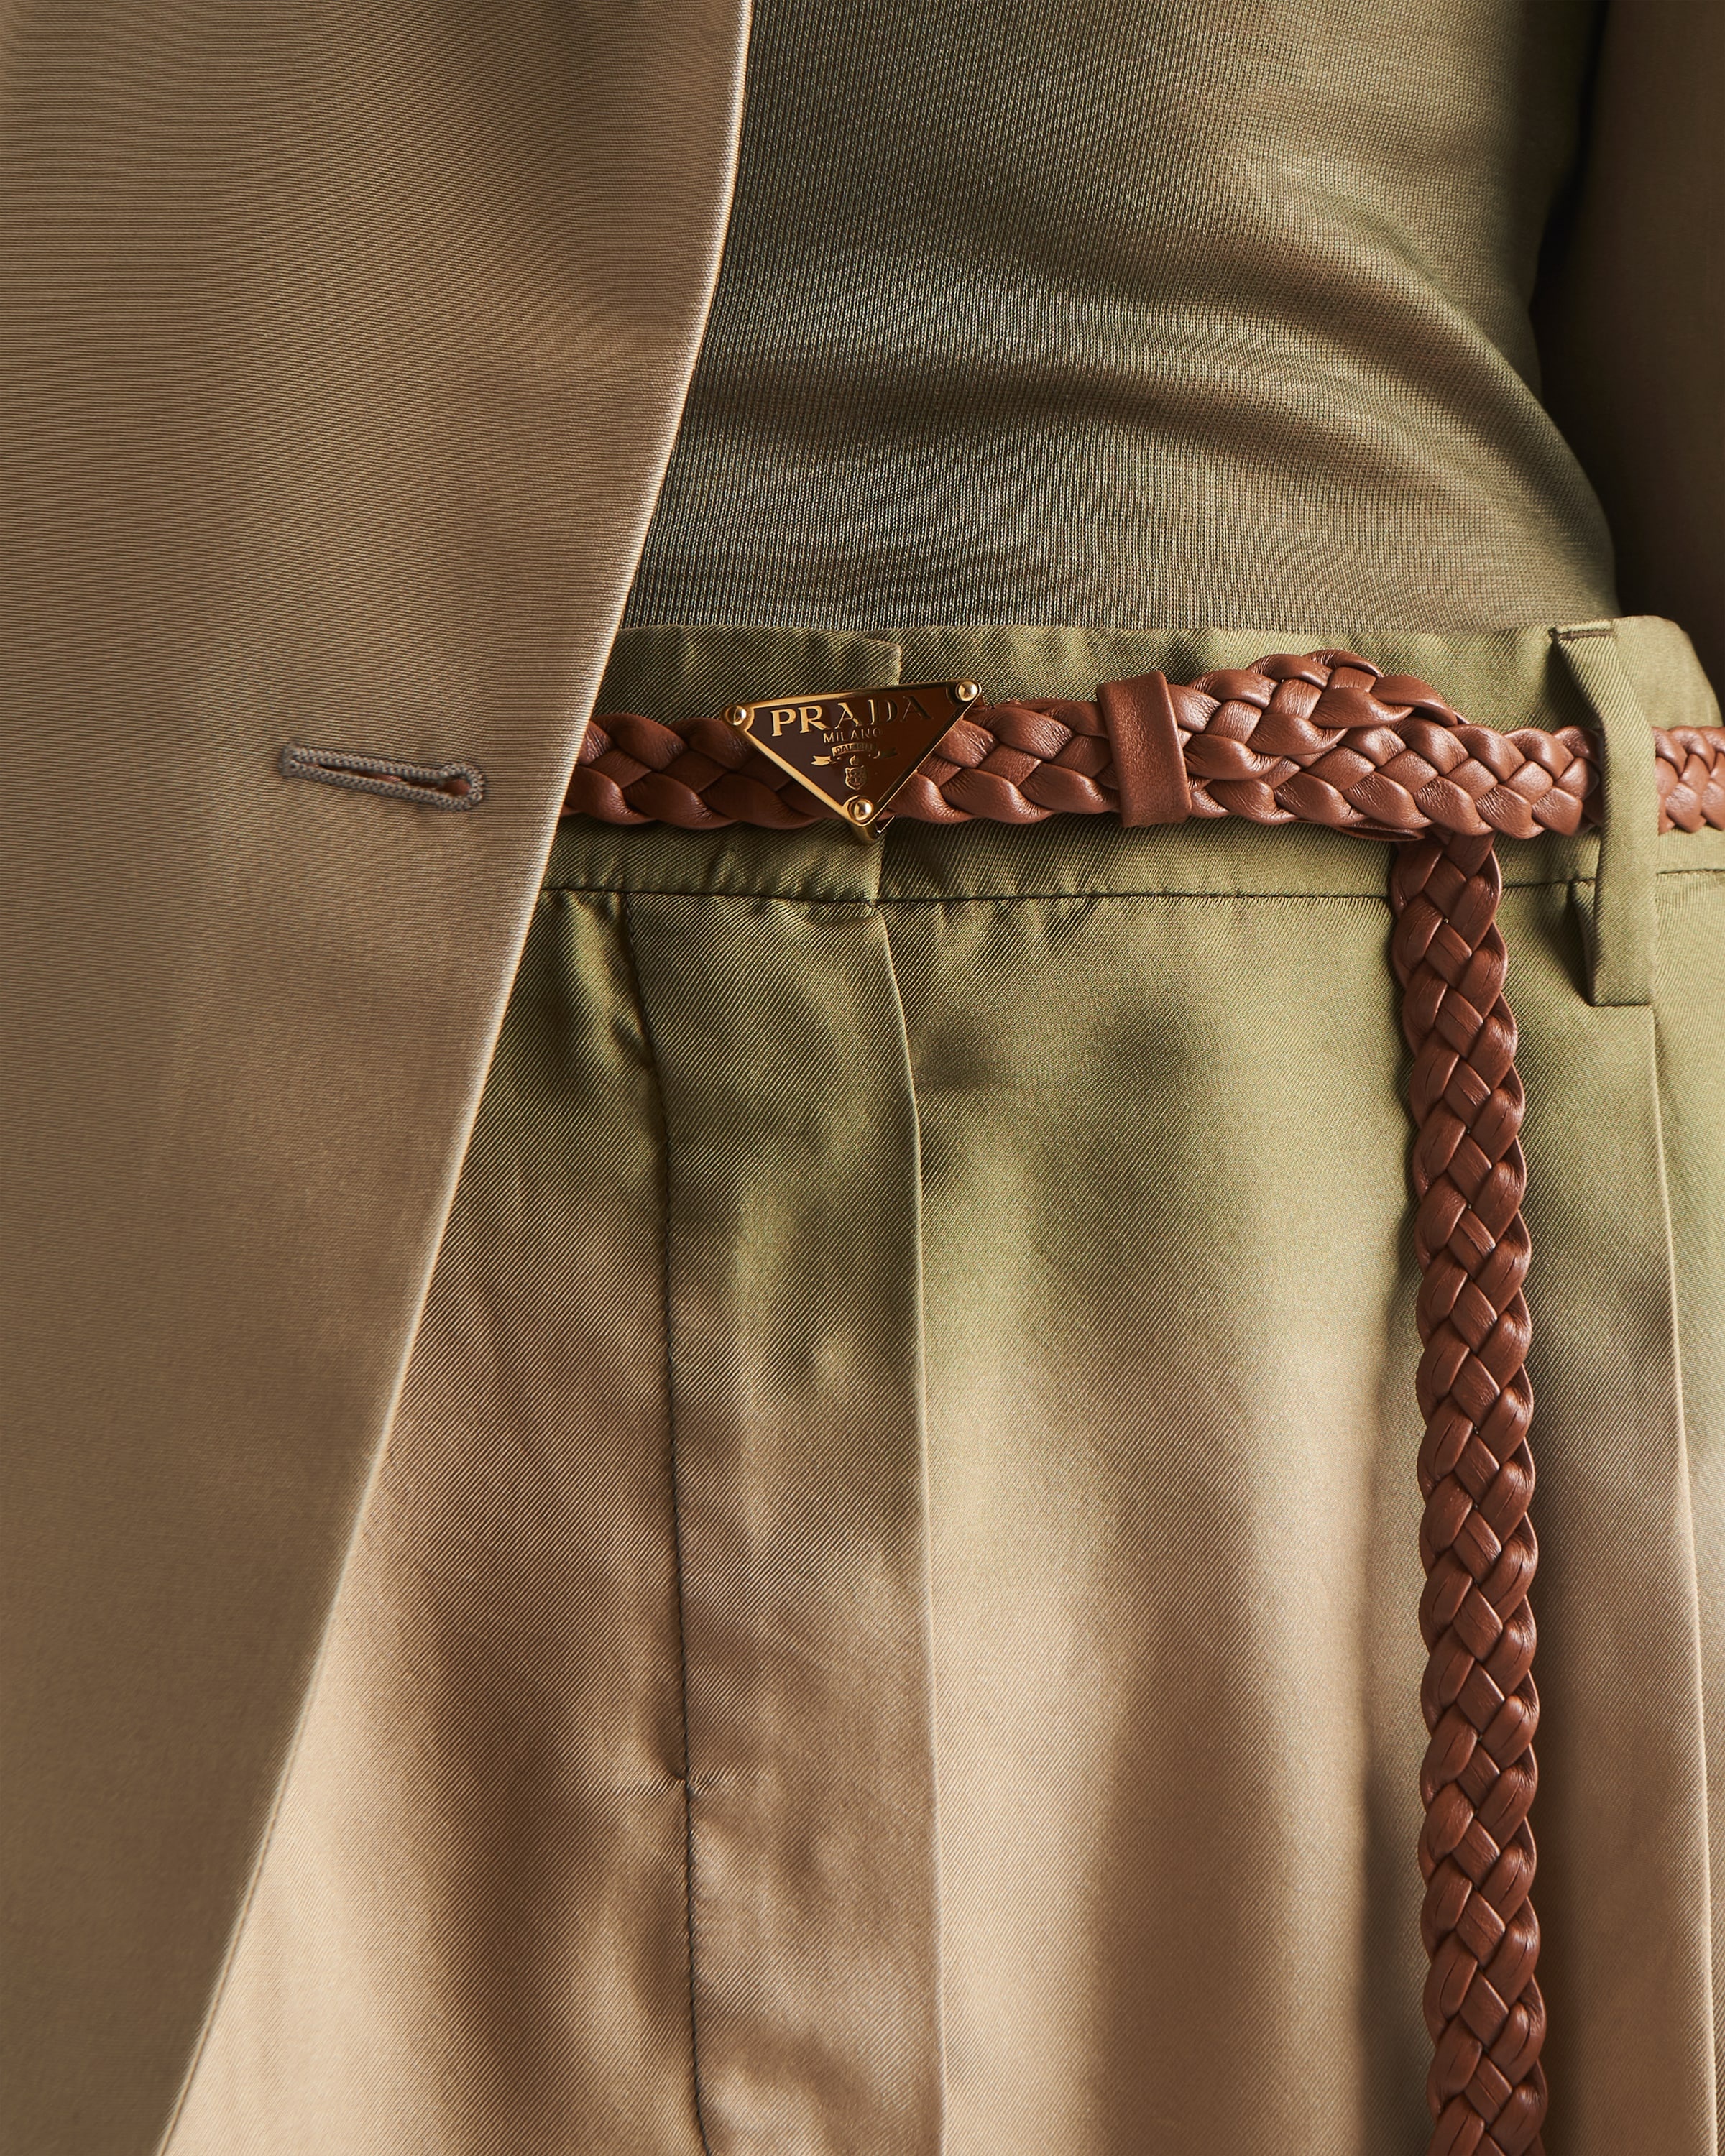 Nappa leather belt - 2